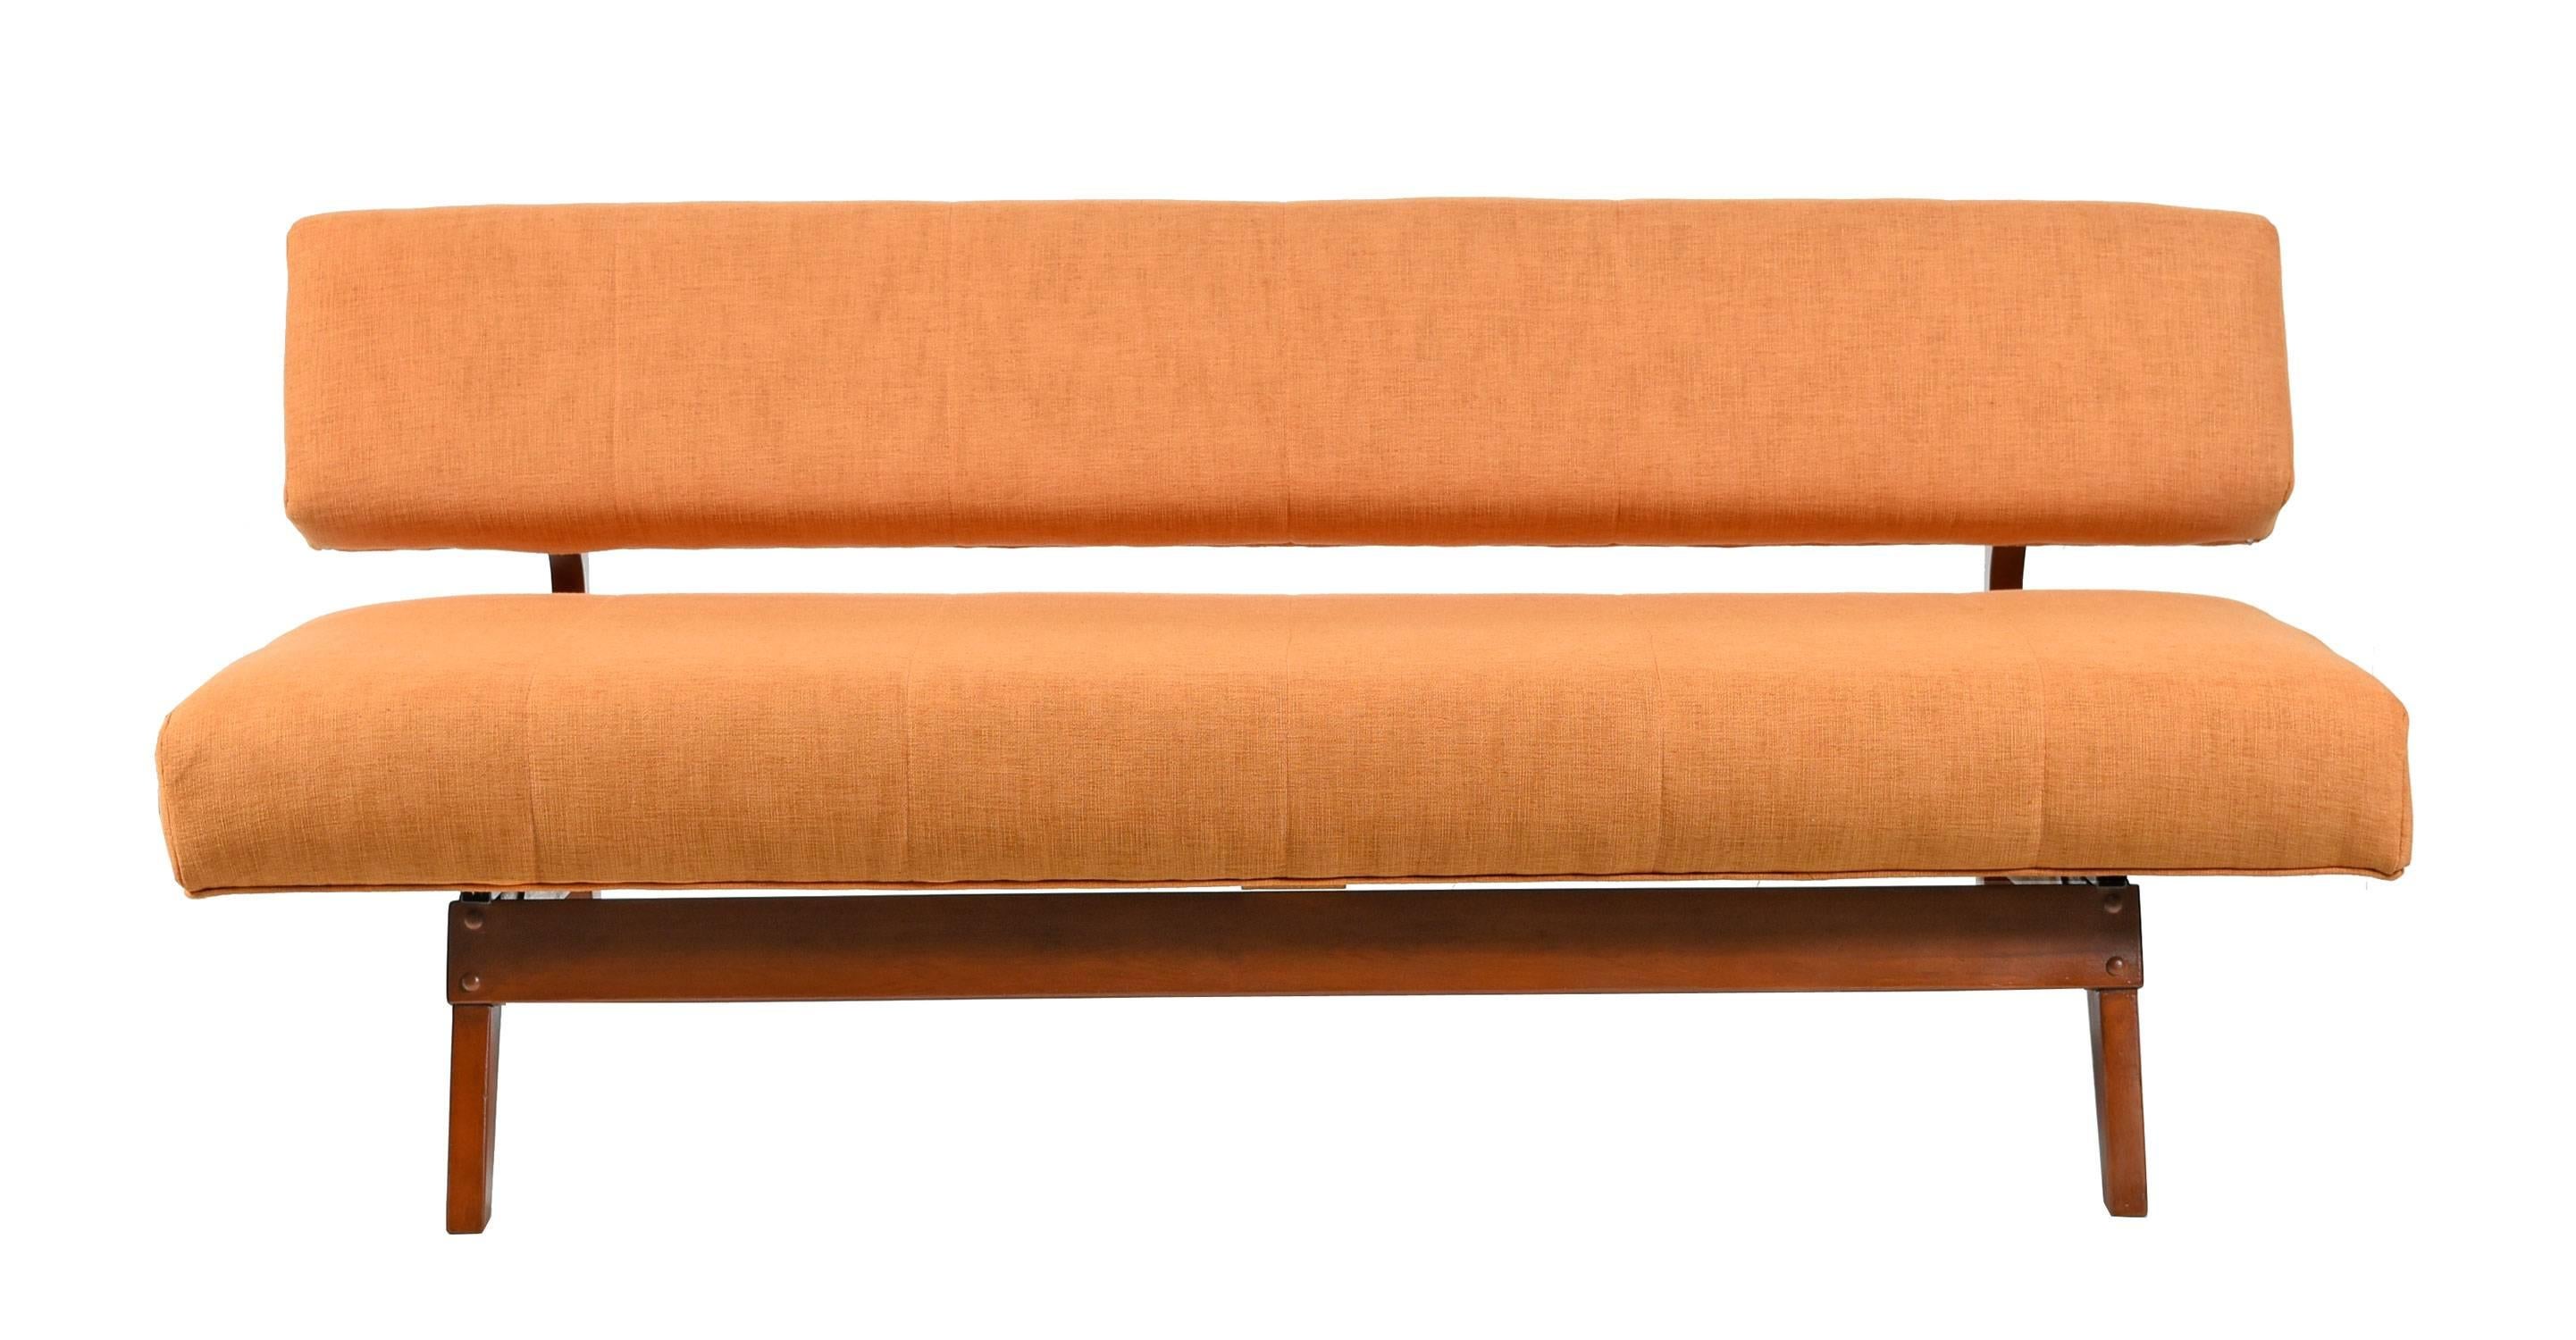 American Mid-Century Modern Orange Convertible Daybed Sofa